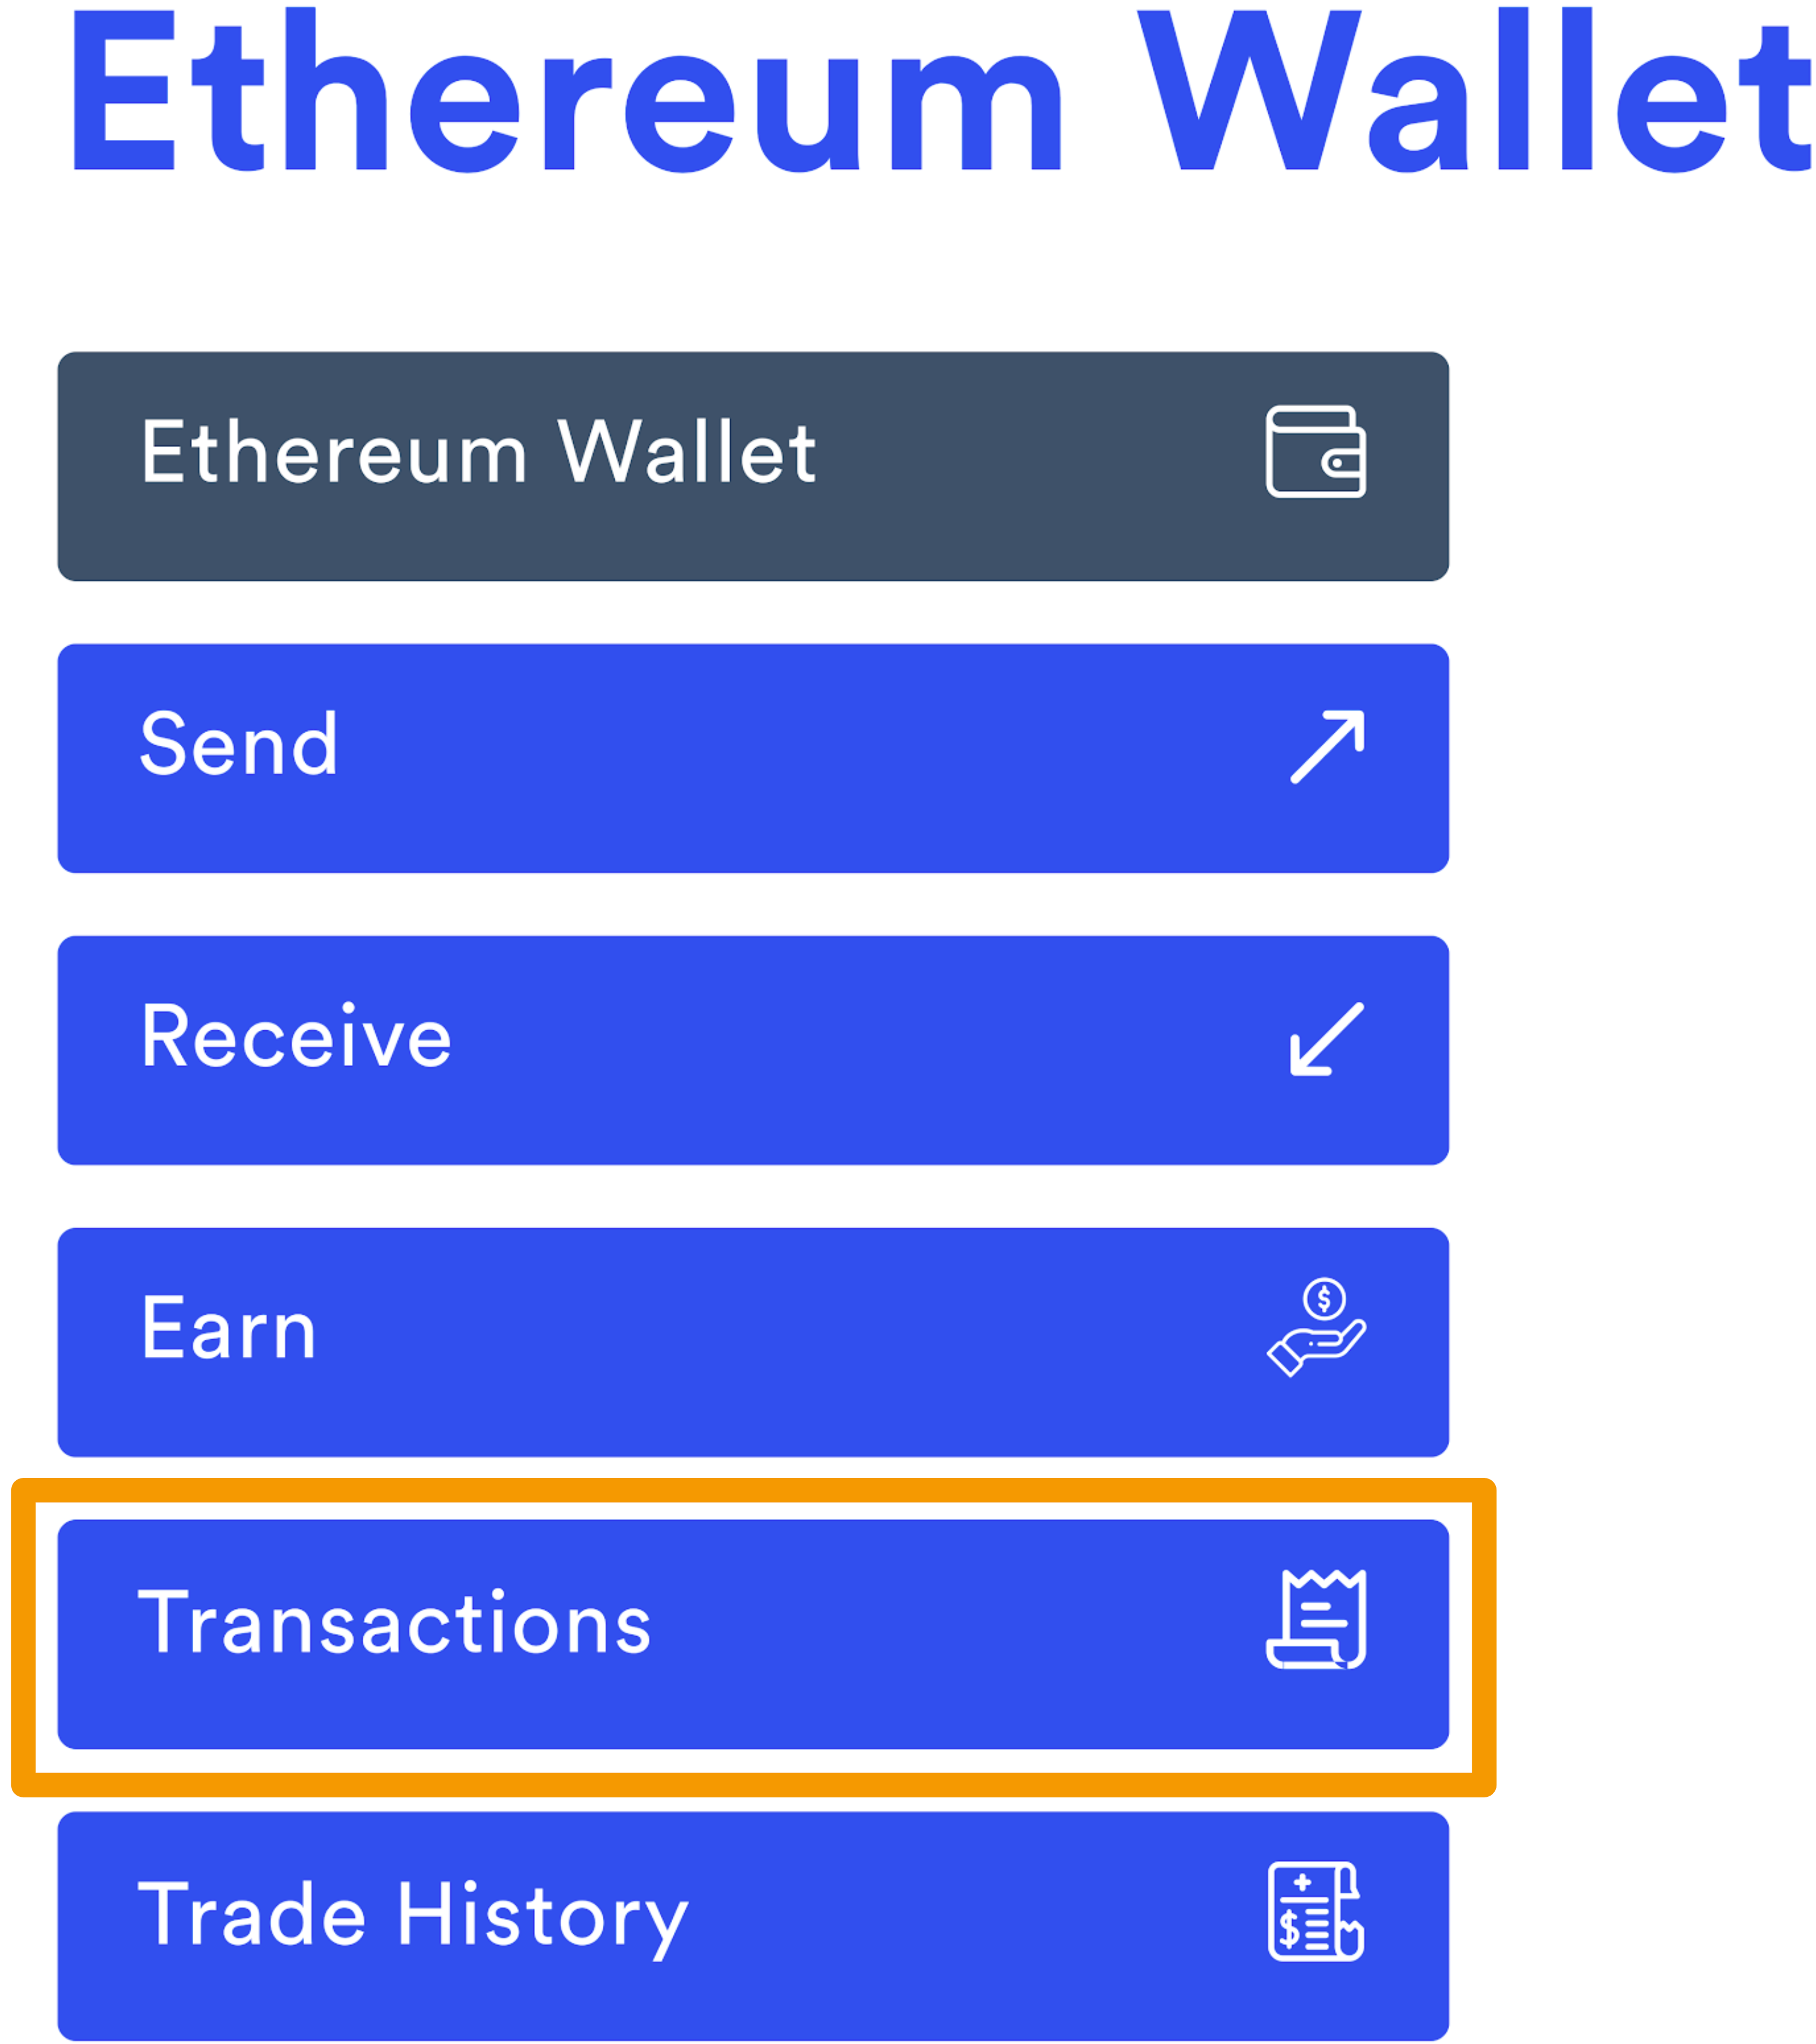 Ethereum_Wallet_Transactions.png